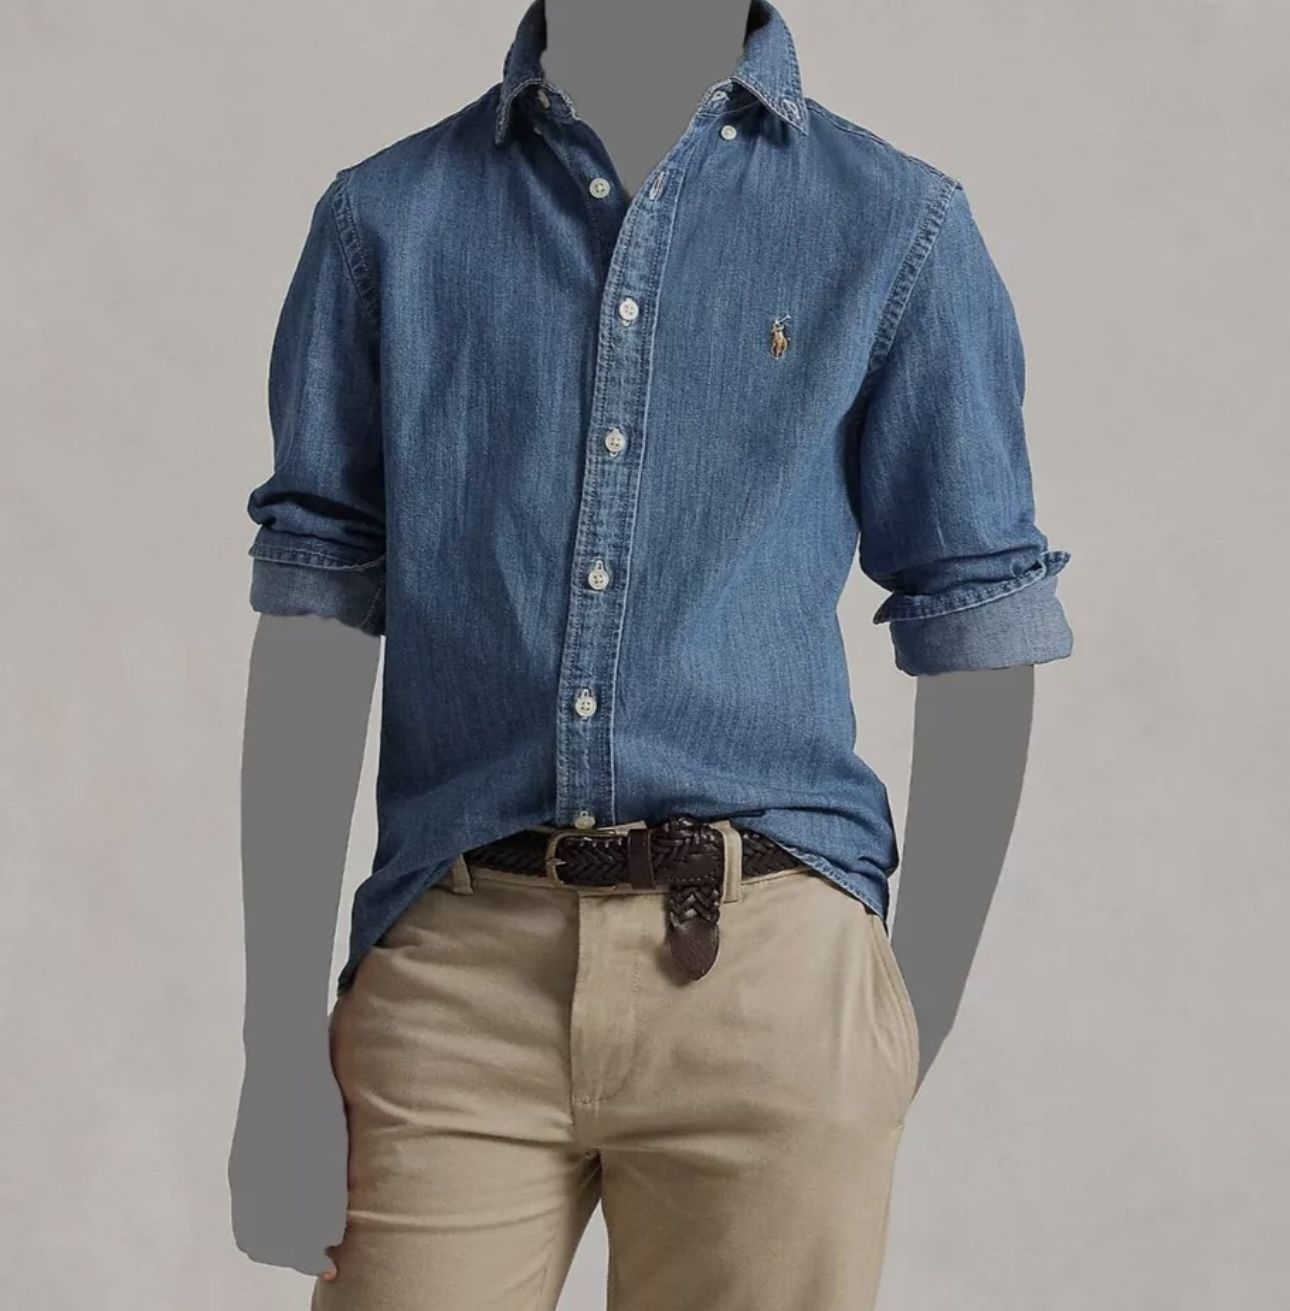 Polo Ralph Lauren Boys Blue Denim Embroidered Button-Down Shirt Size M/10-12